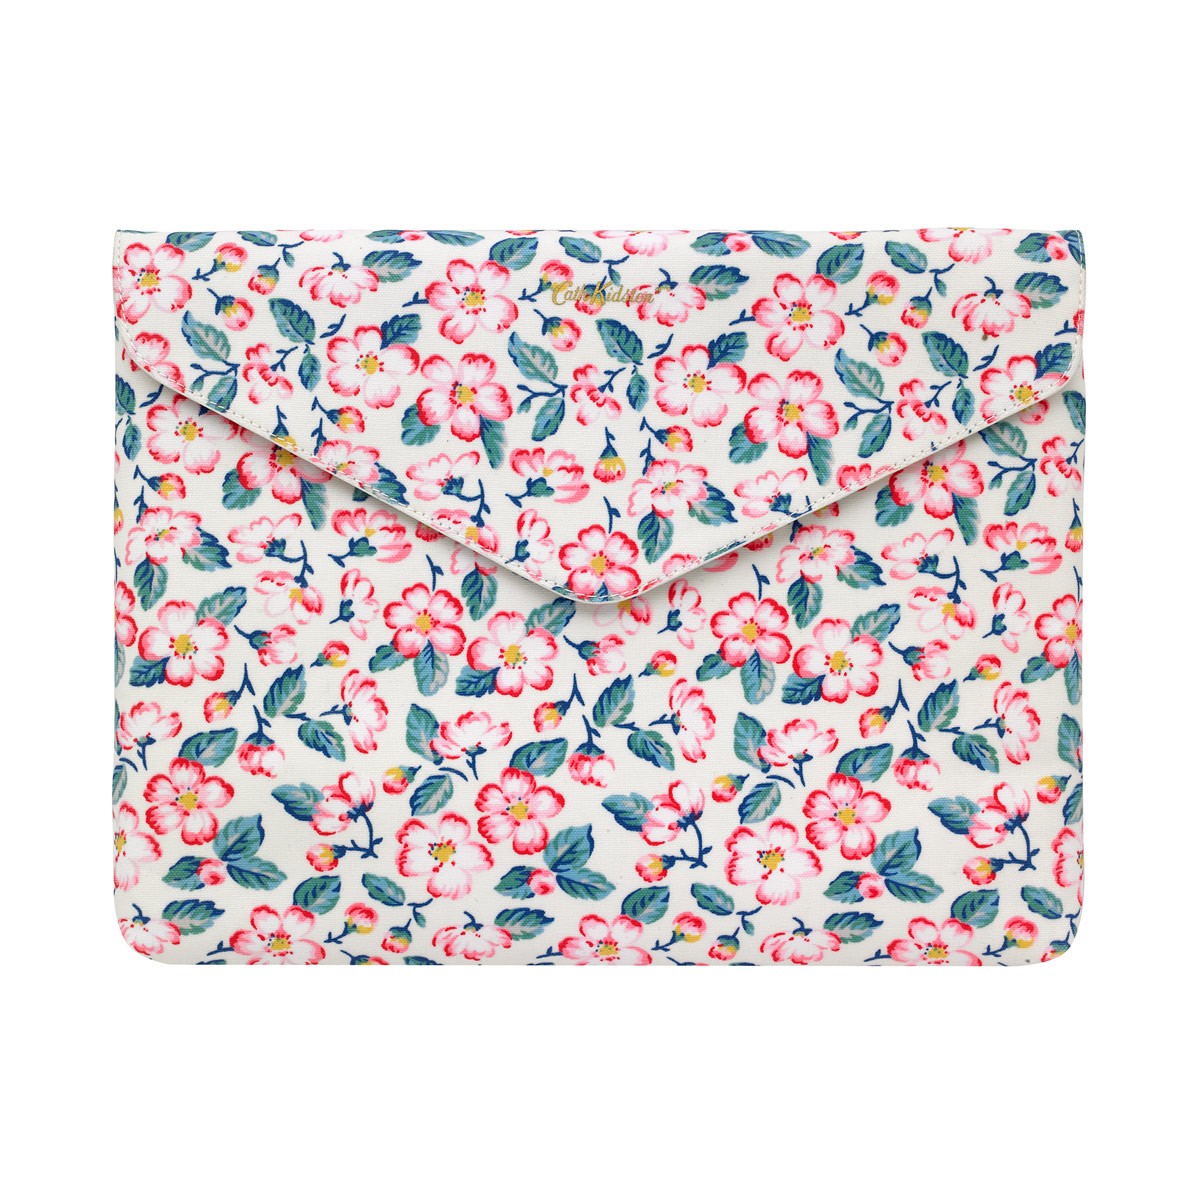 Cath Kidston Laptop Sleeve - Climbing Blossom 832601 - 13 Inch